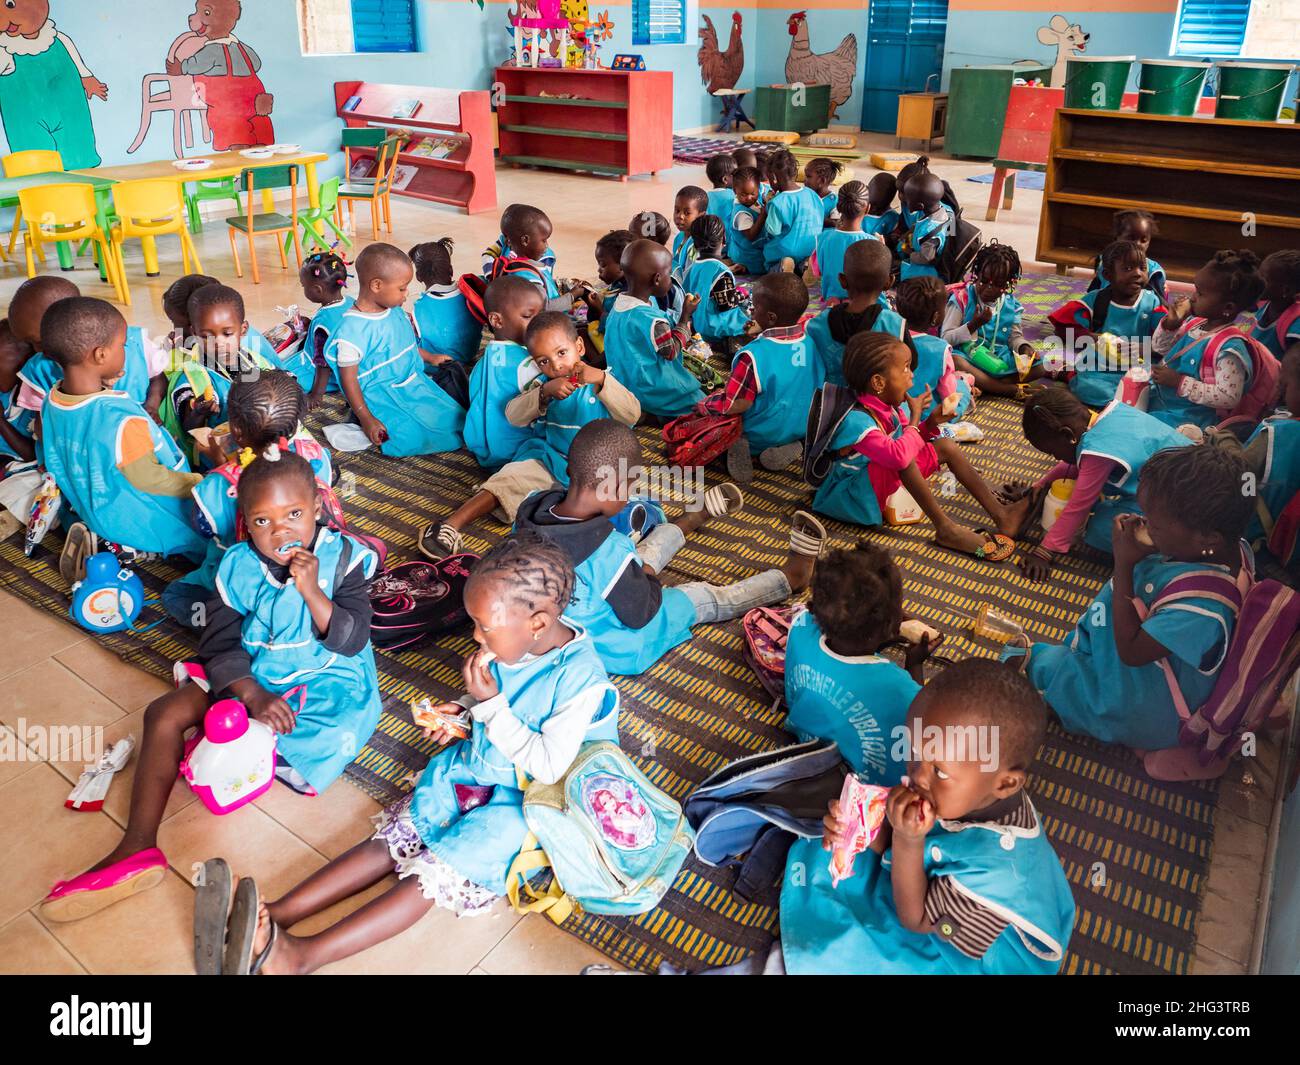 Senegal, Africa - January 2019: African school children wearing uniform during school activities. Senegal Africa. Stock Photo